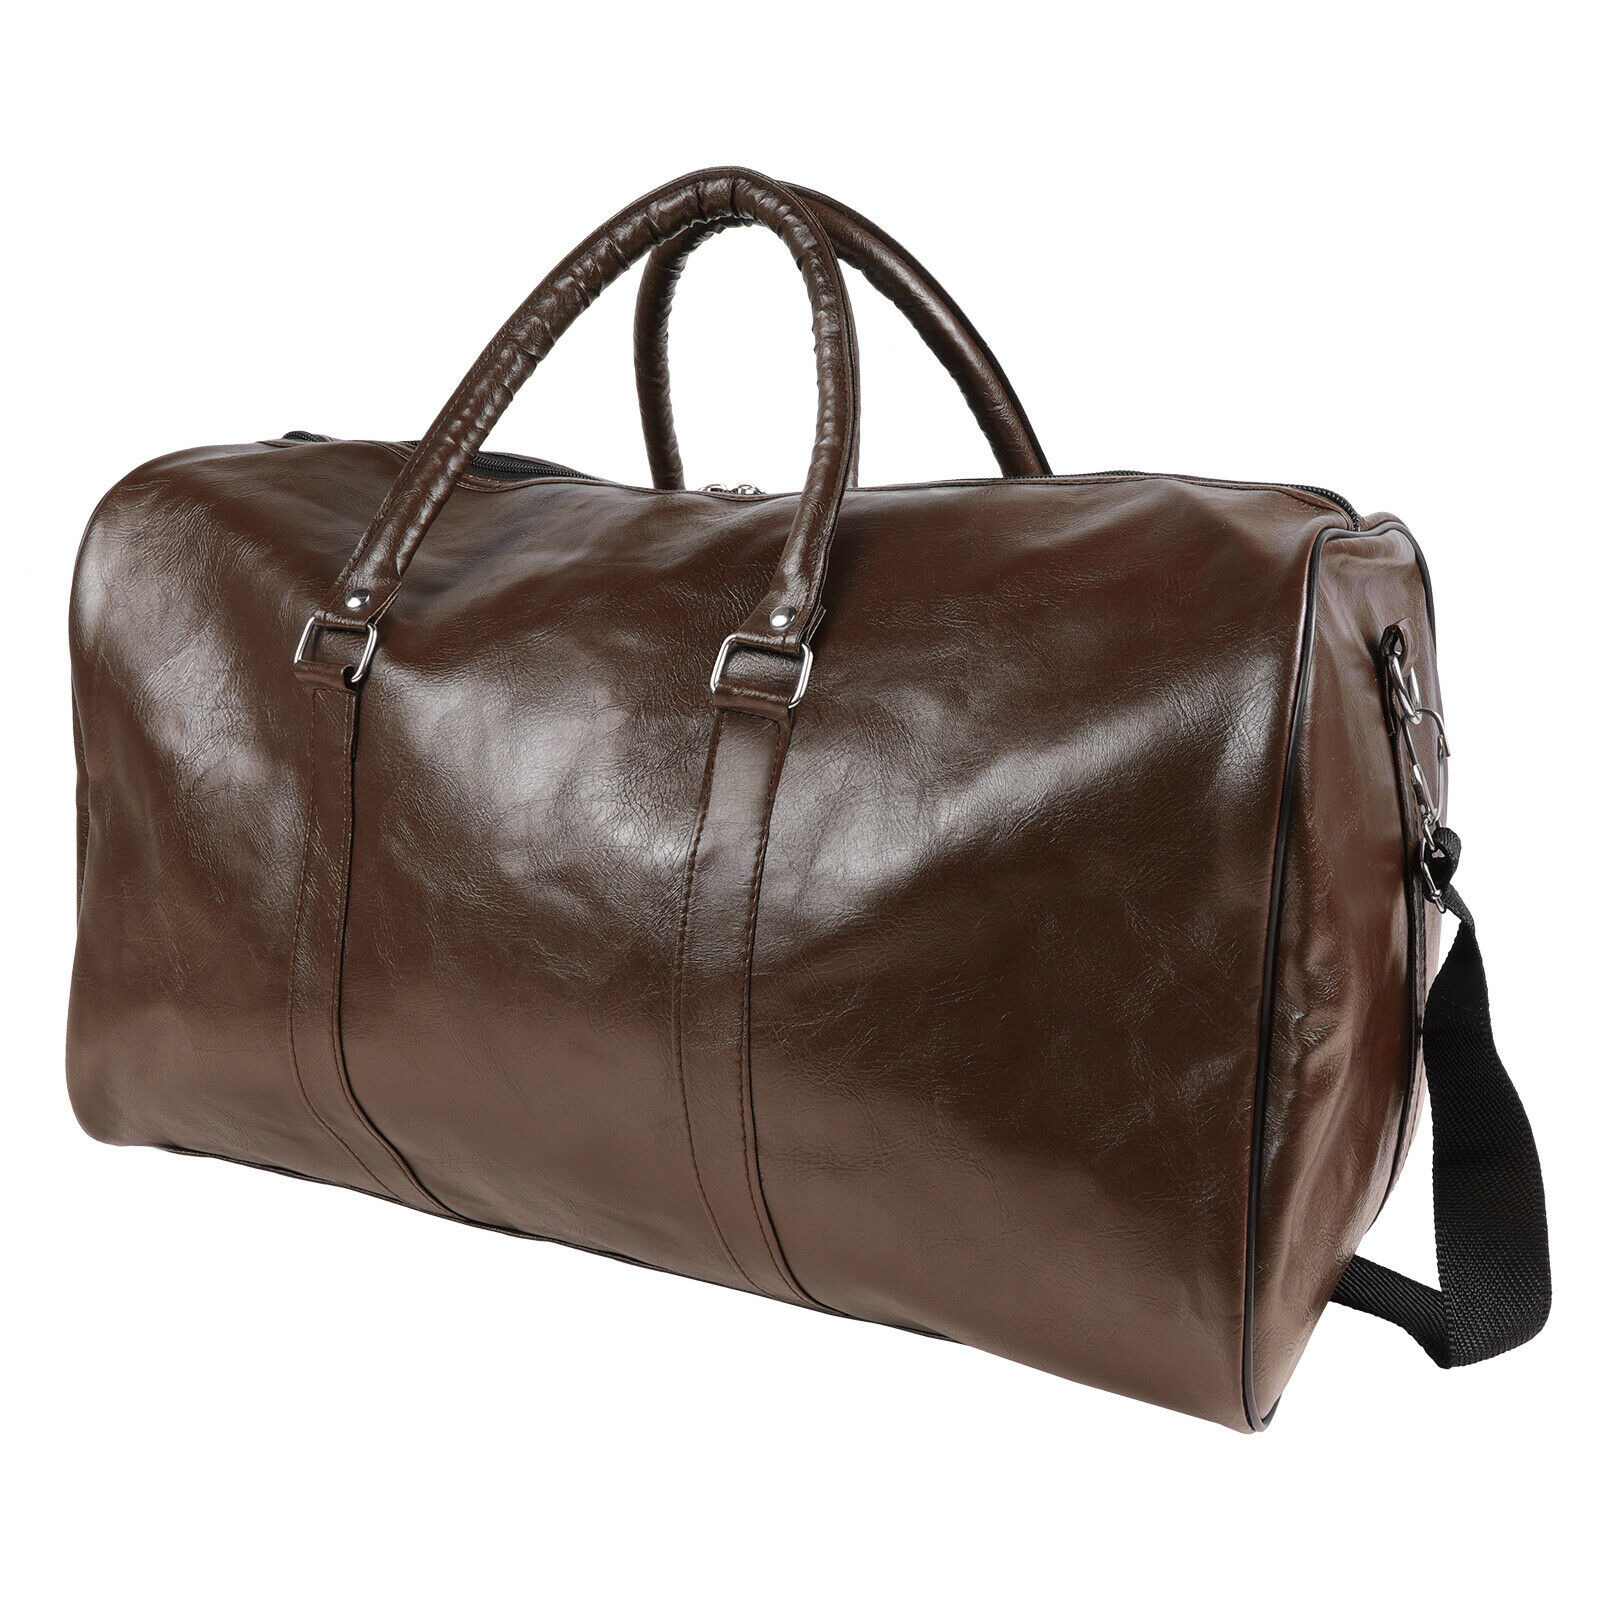 40L PU Leather Duffle Bag Travel Luggage Sport Handbag Waterproof Tote Men Women